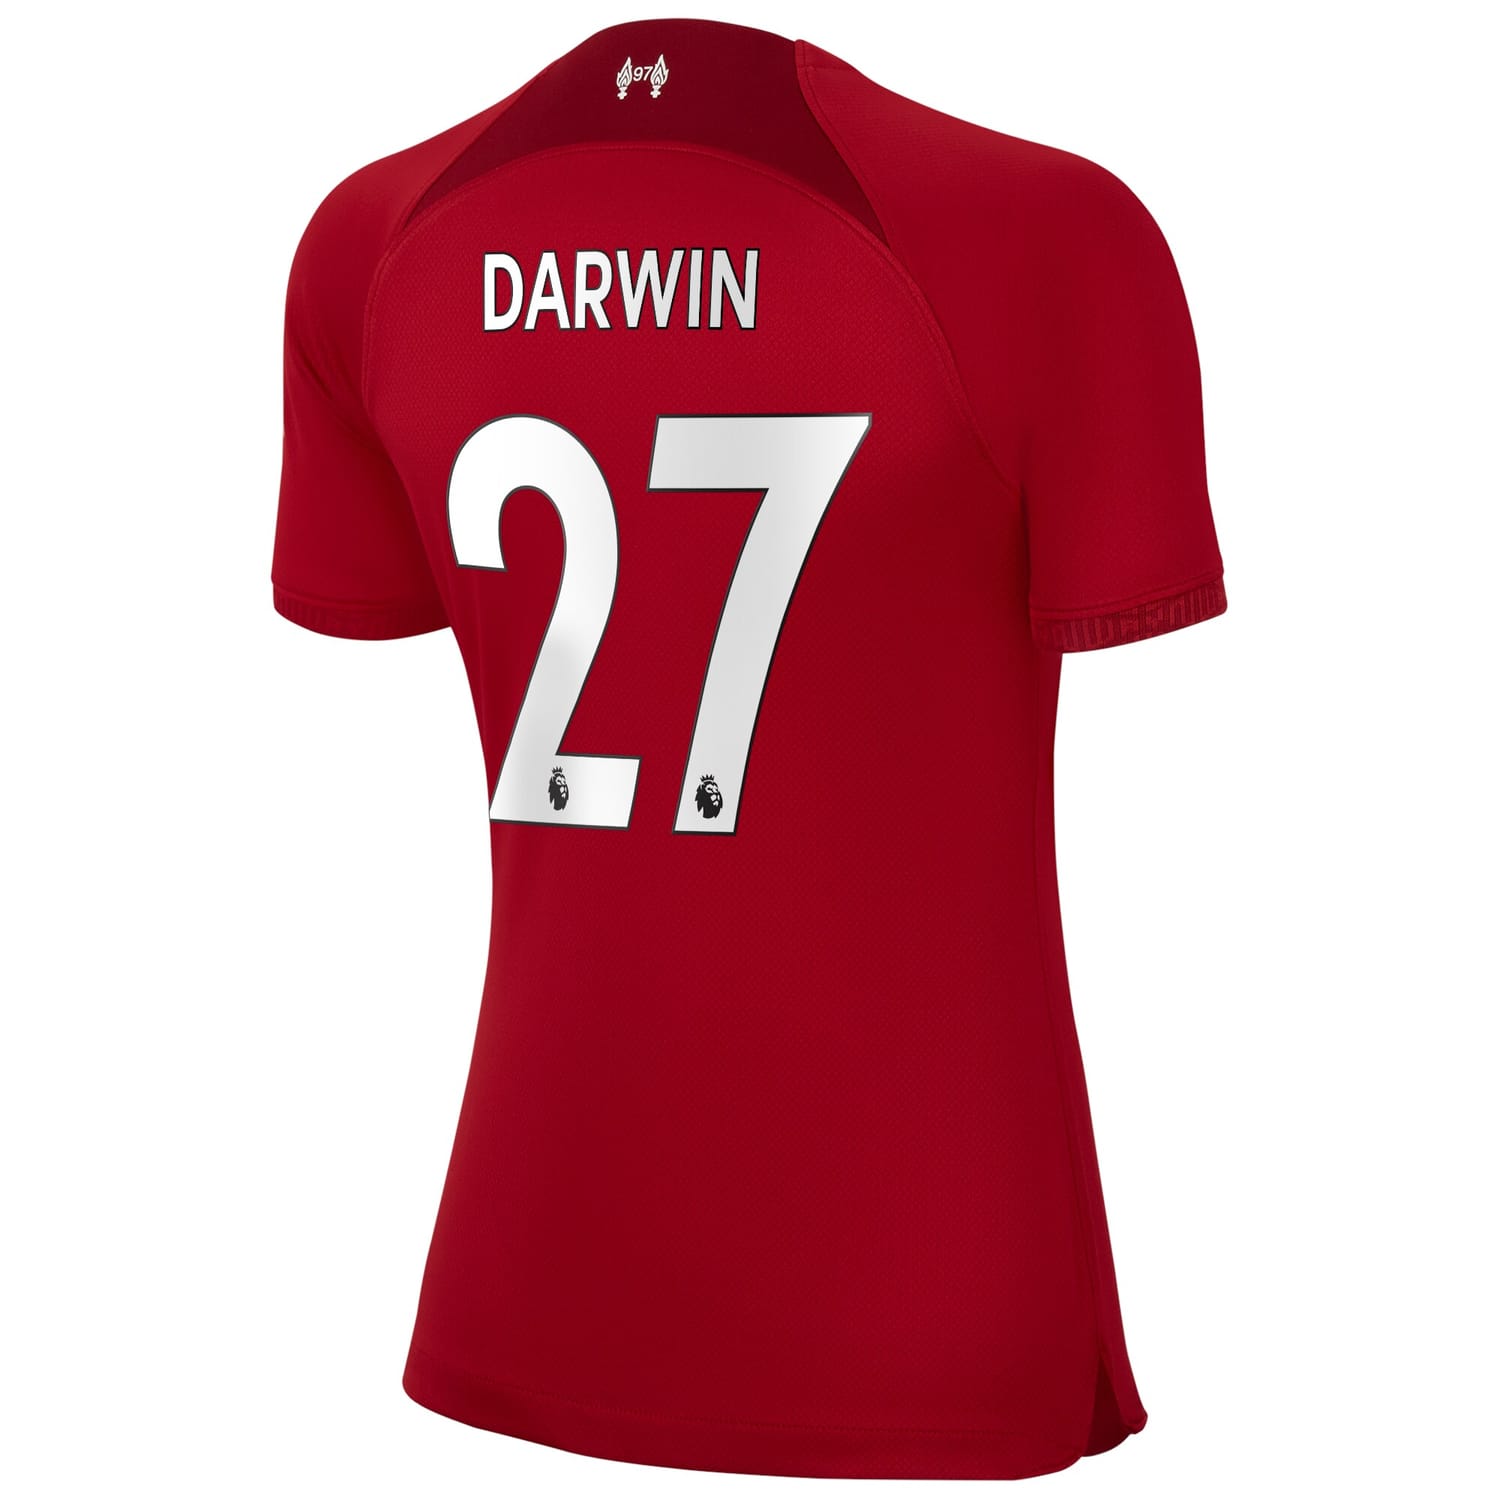 Premier League Liverpool Home Jersey Shirt Red 2022-23 player Darwin Núñez printing for Women